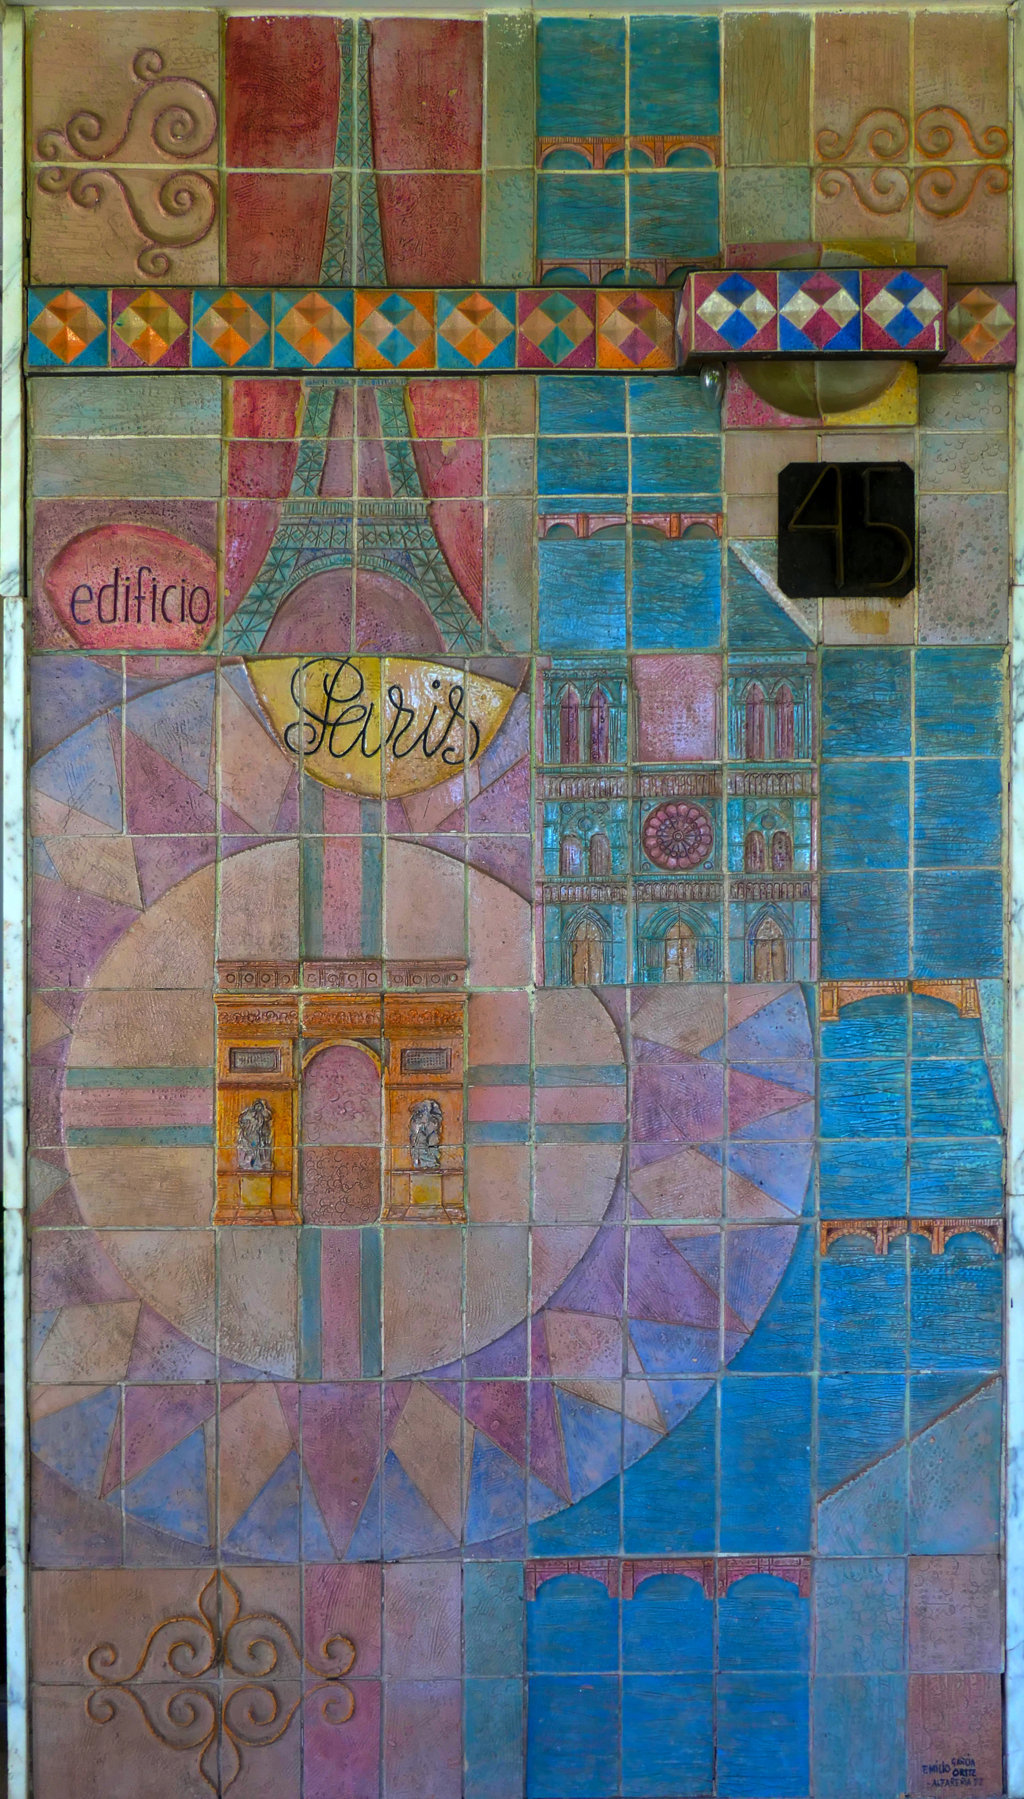 01561. Panel de azulejos. Fachada de entrada. Edificio París. Sevilla.